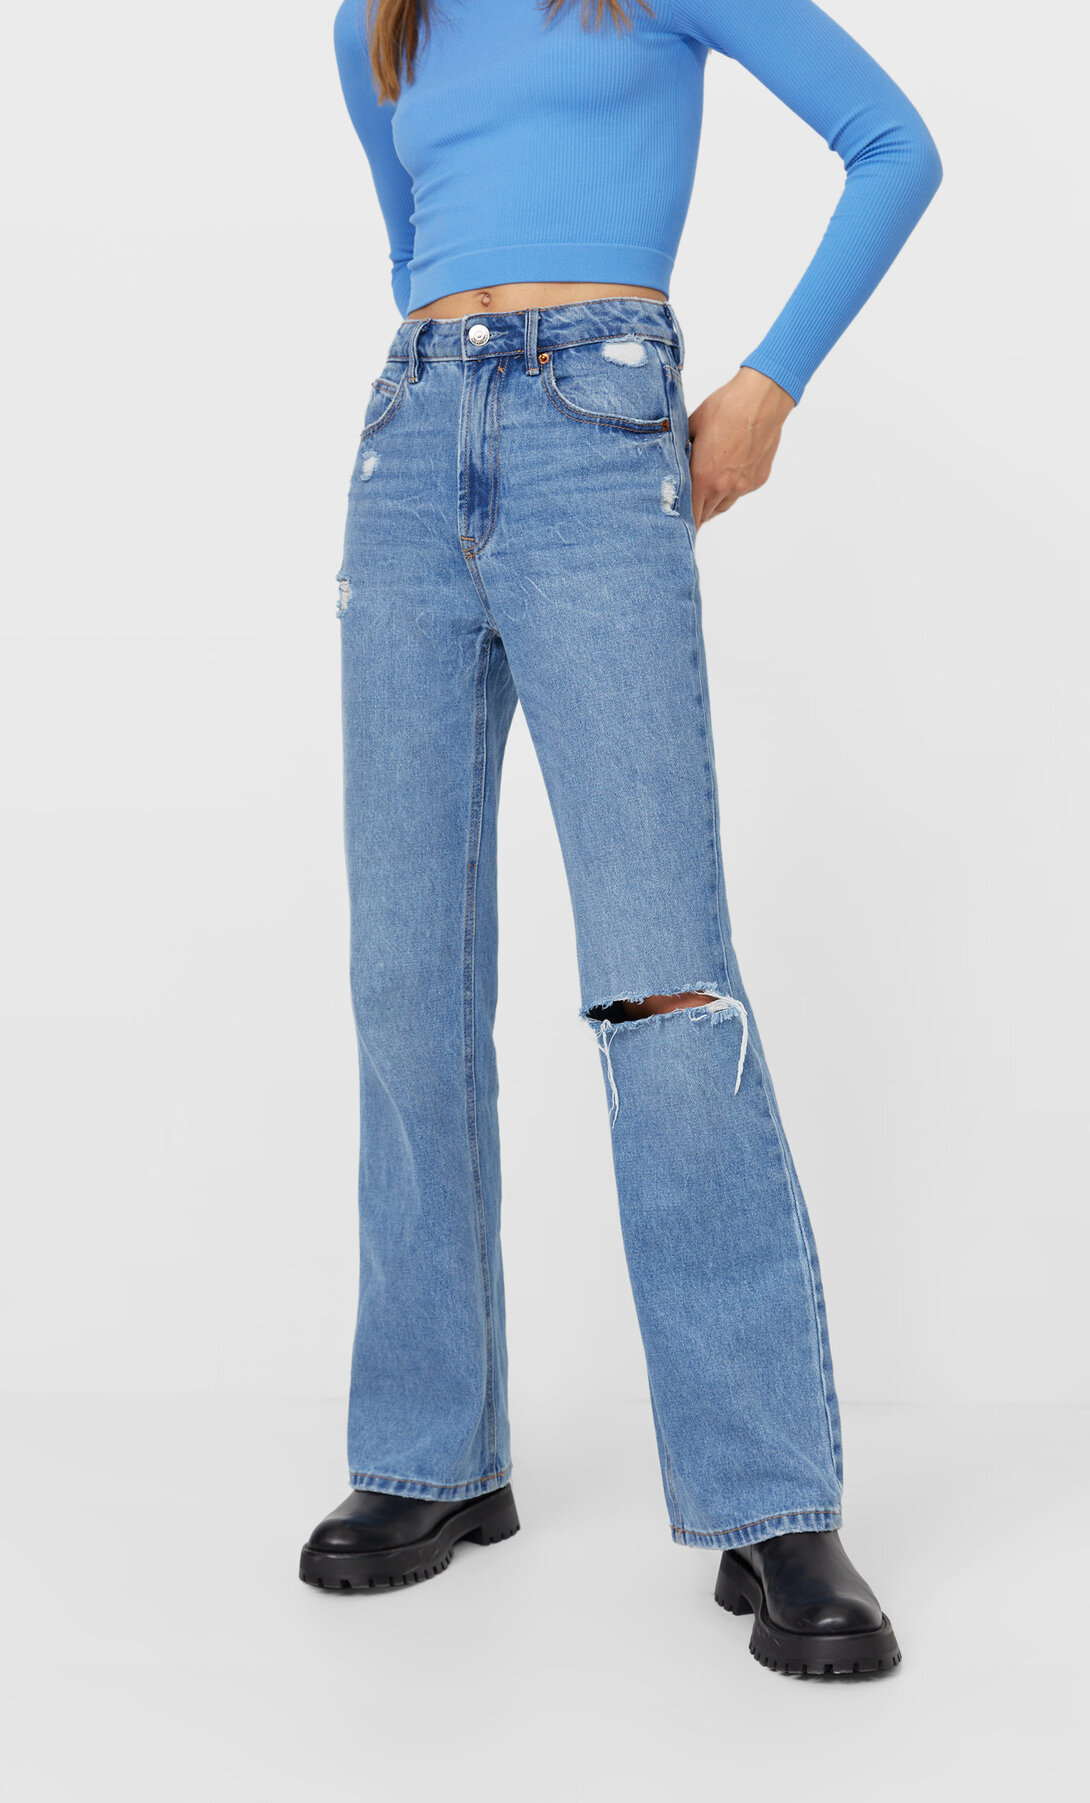 stradivarius jeans flare